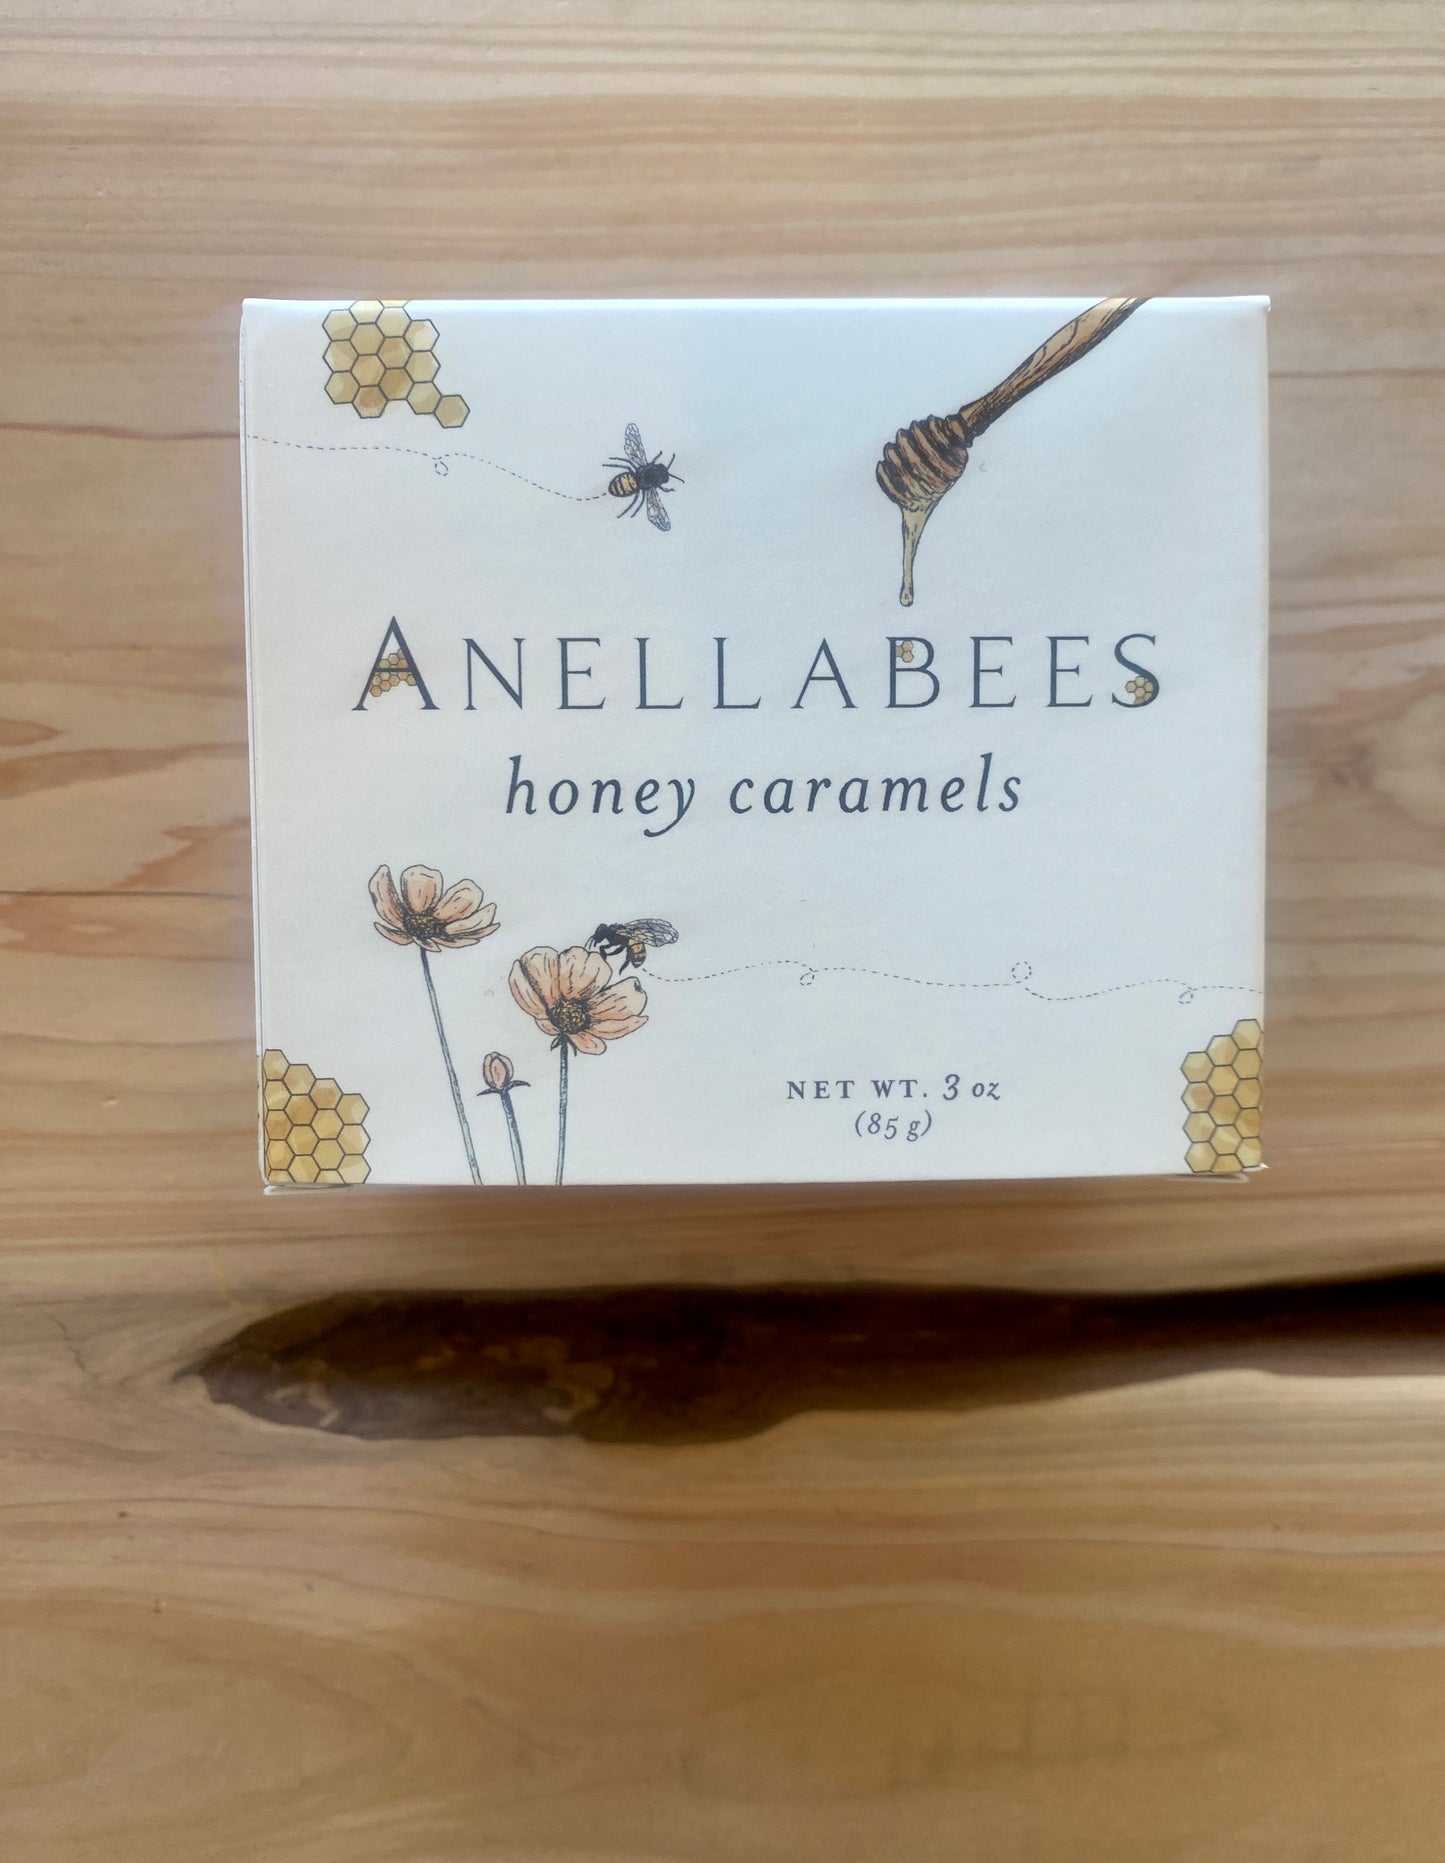 Anellabees Honey Caramel Box